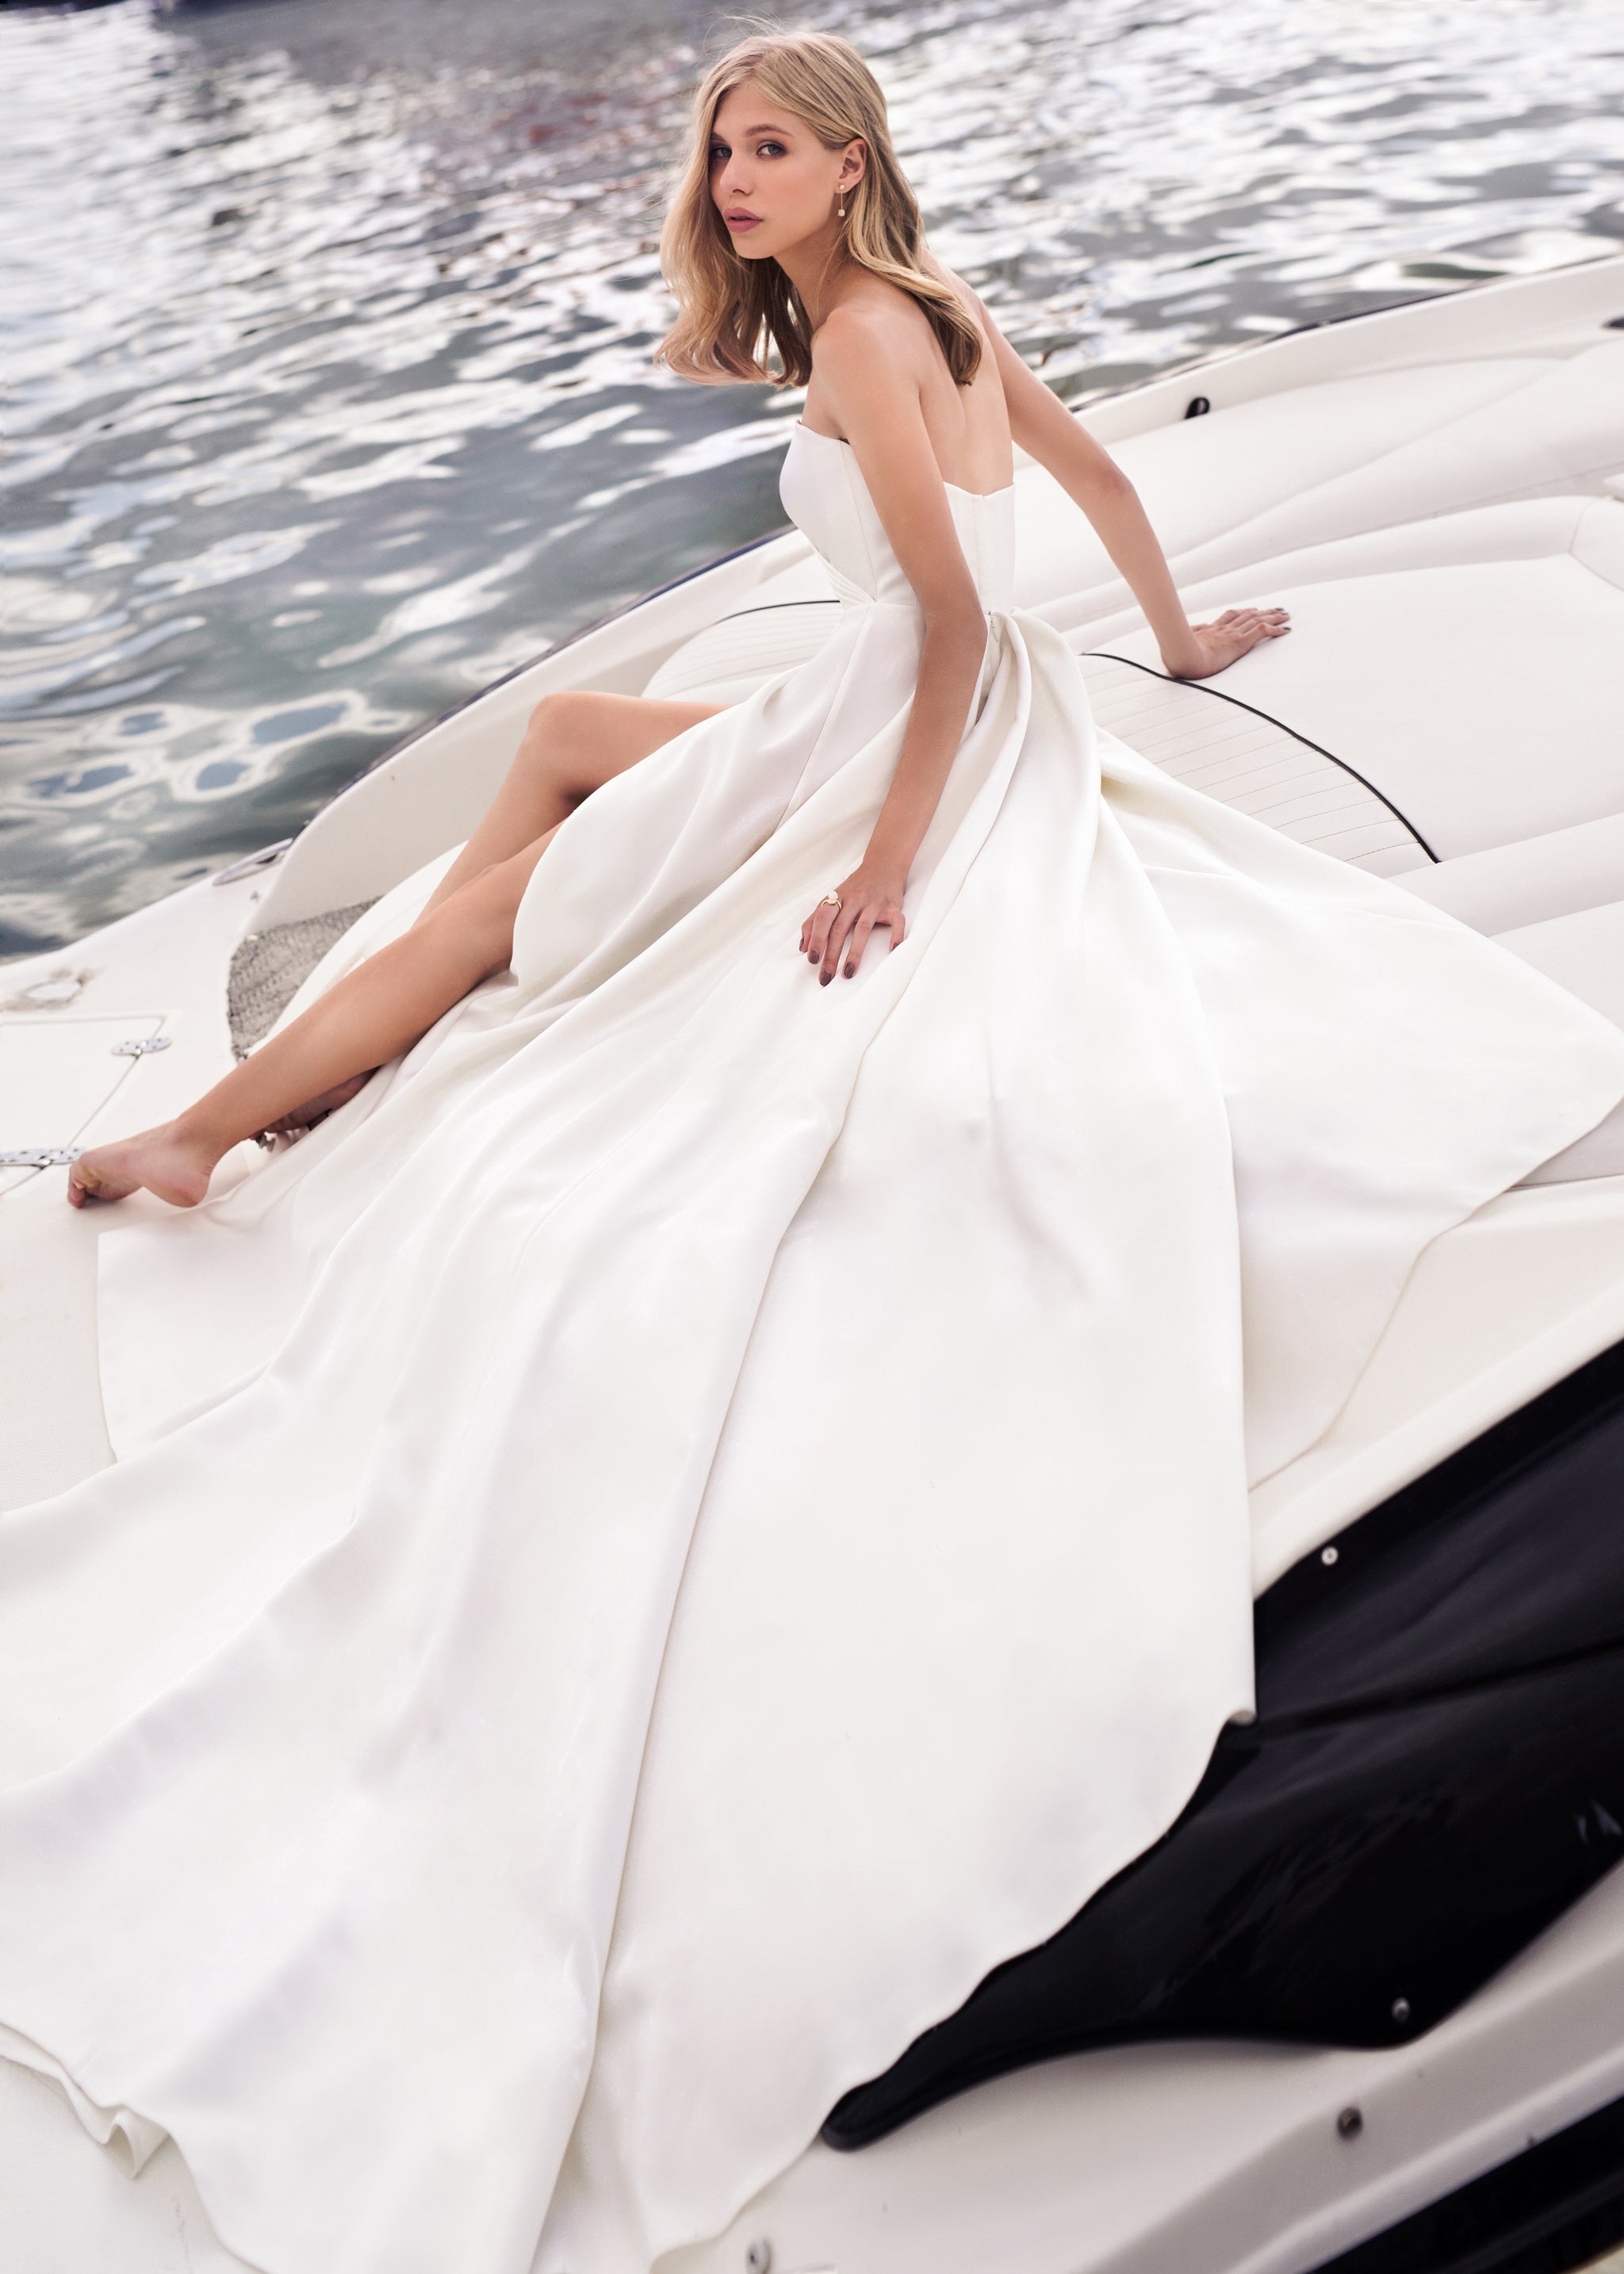 Budget wedding dress online. Simple white bridal gown. Simple white dress for civil wedding.